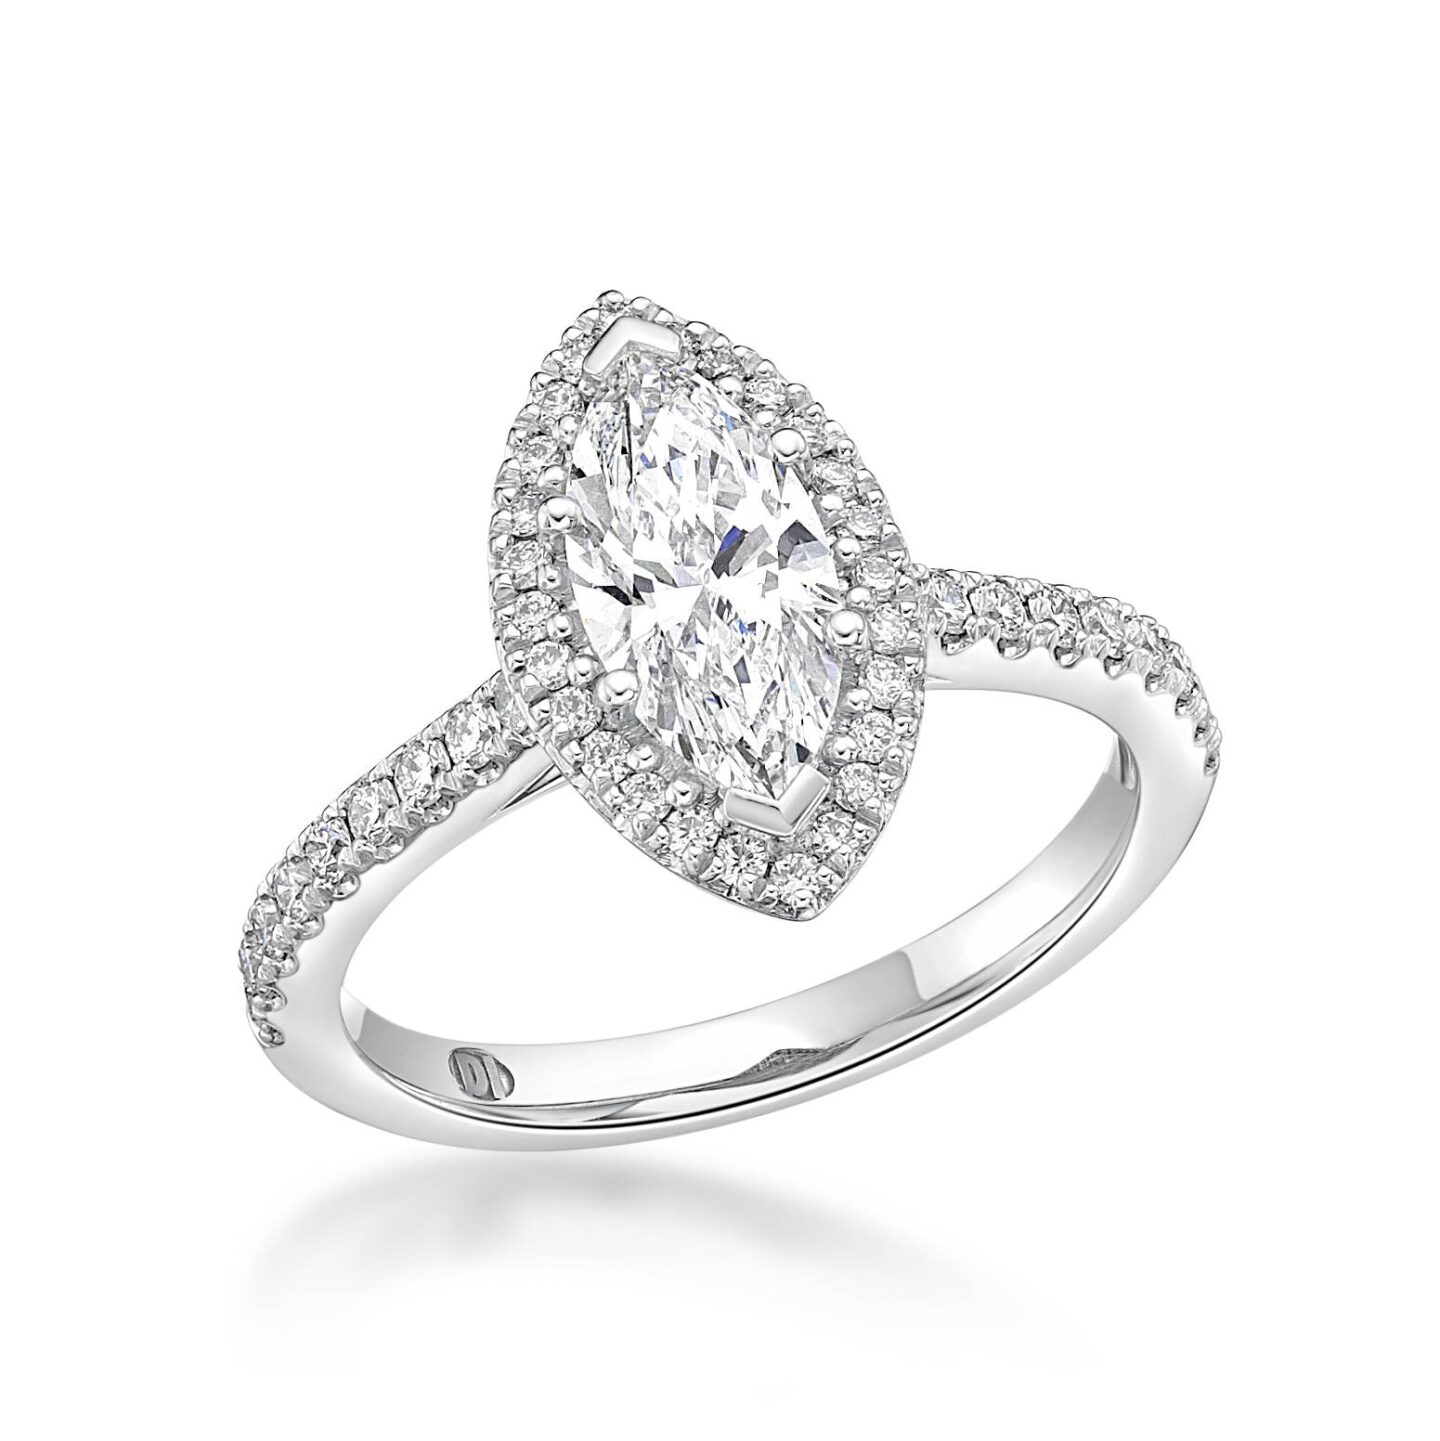 Estelle – Marquise Cut Diamond Engagement Ring